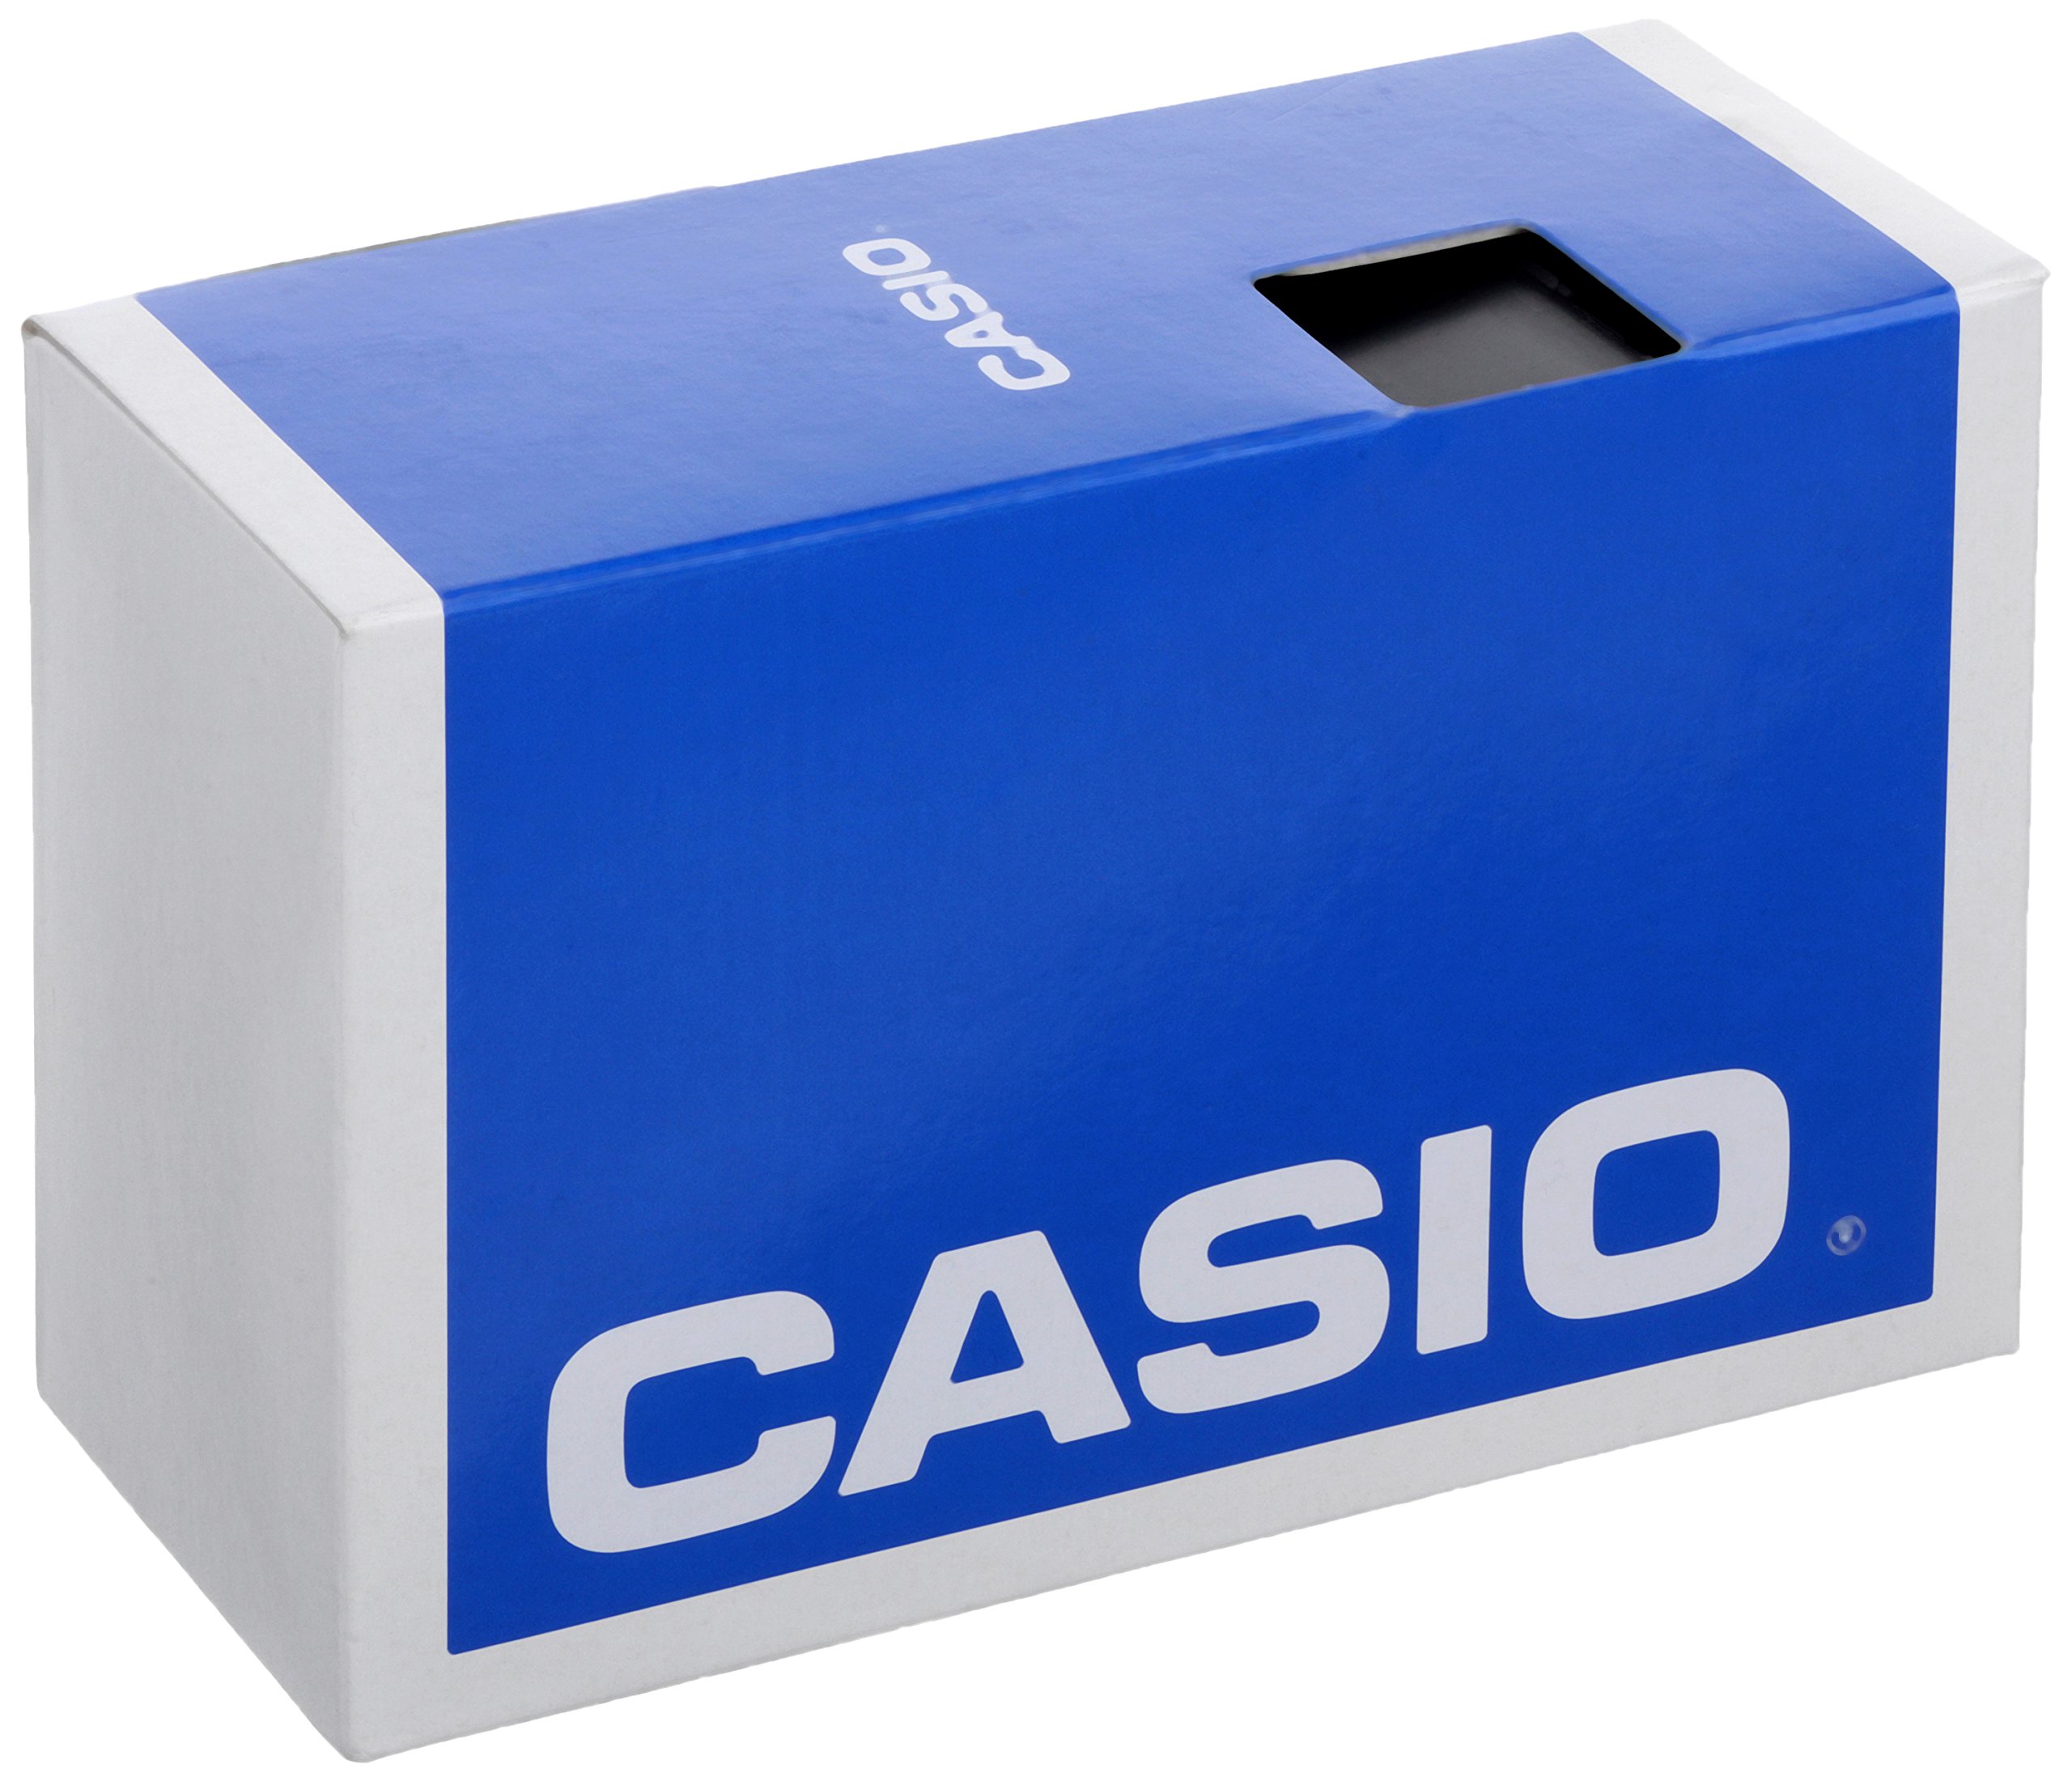 Casio Women's LTP1215A-7ACR Stainless Steel Watch